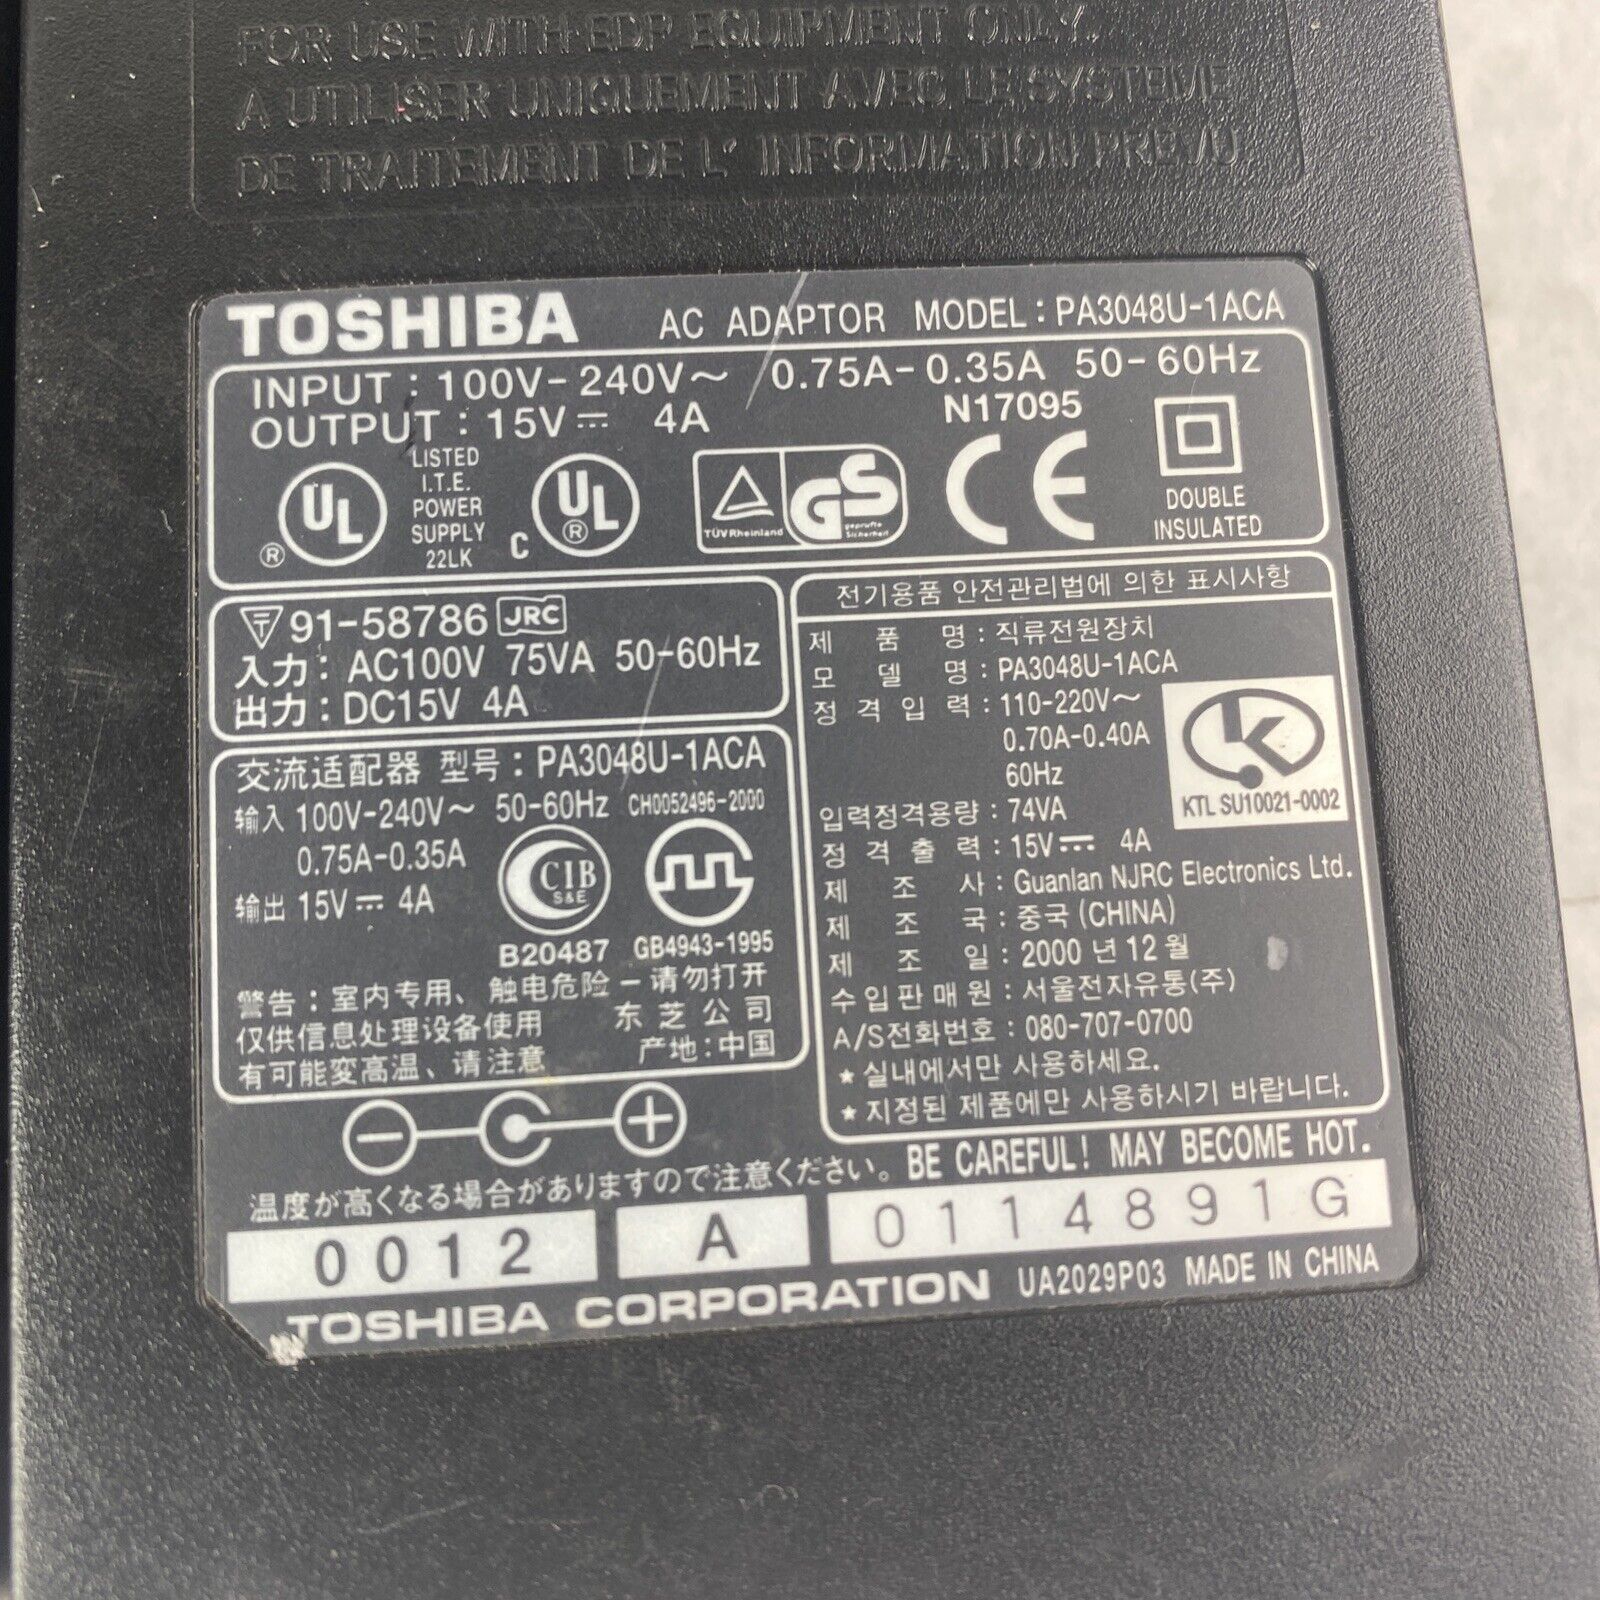 Lot of 3 Toshiba PA3048U-1ACA Laptop Chargers 15V AC Power Adapter